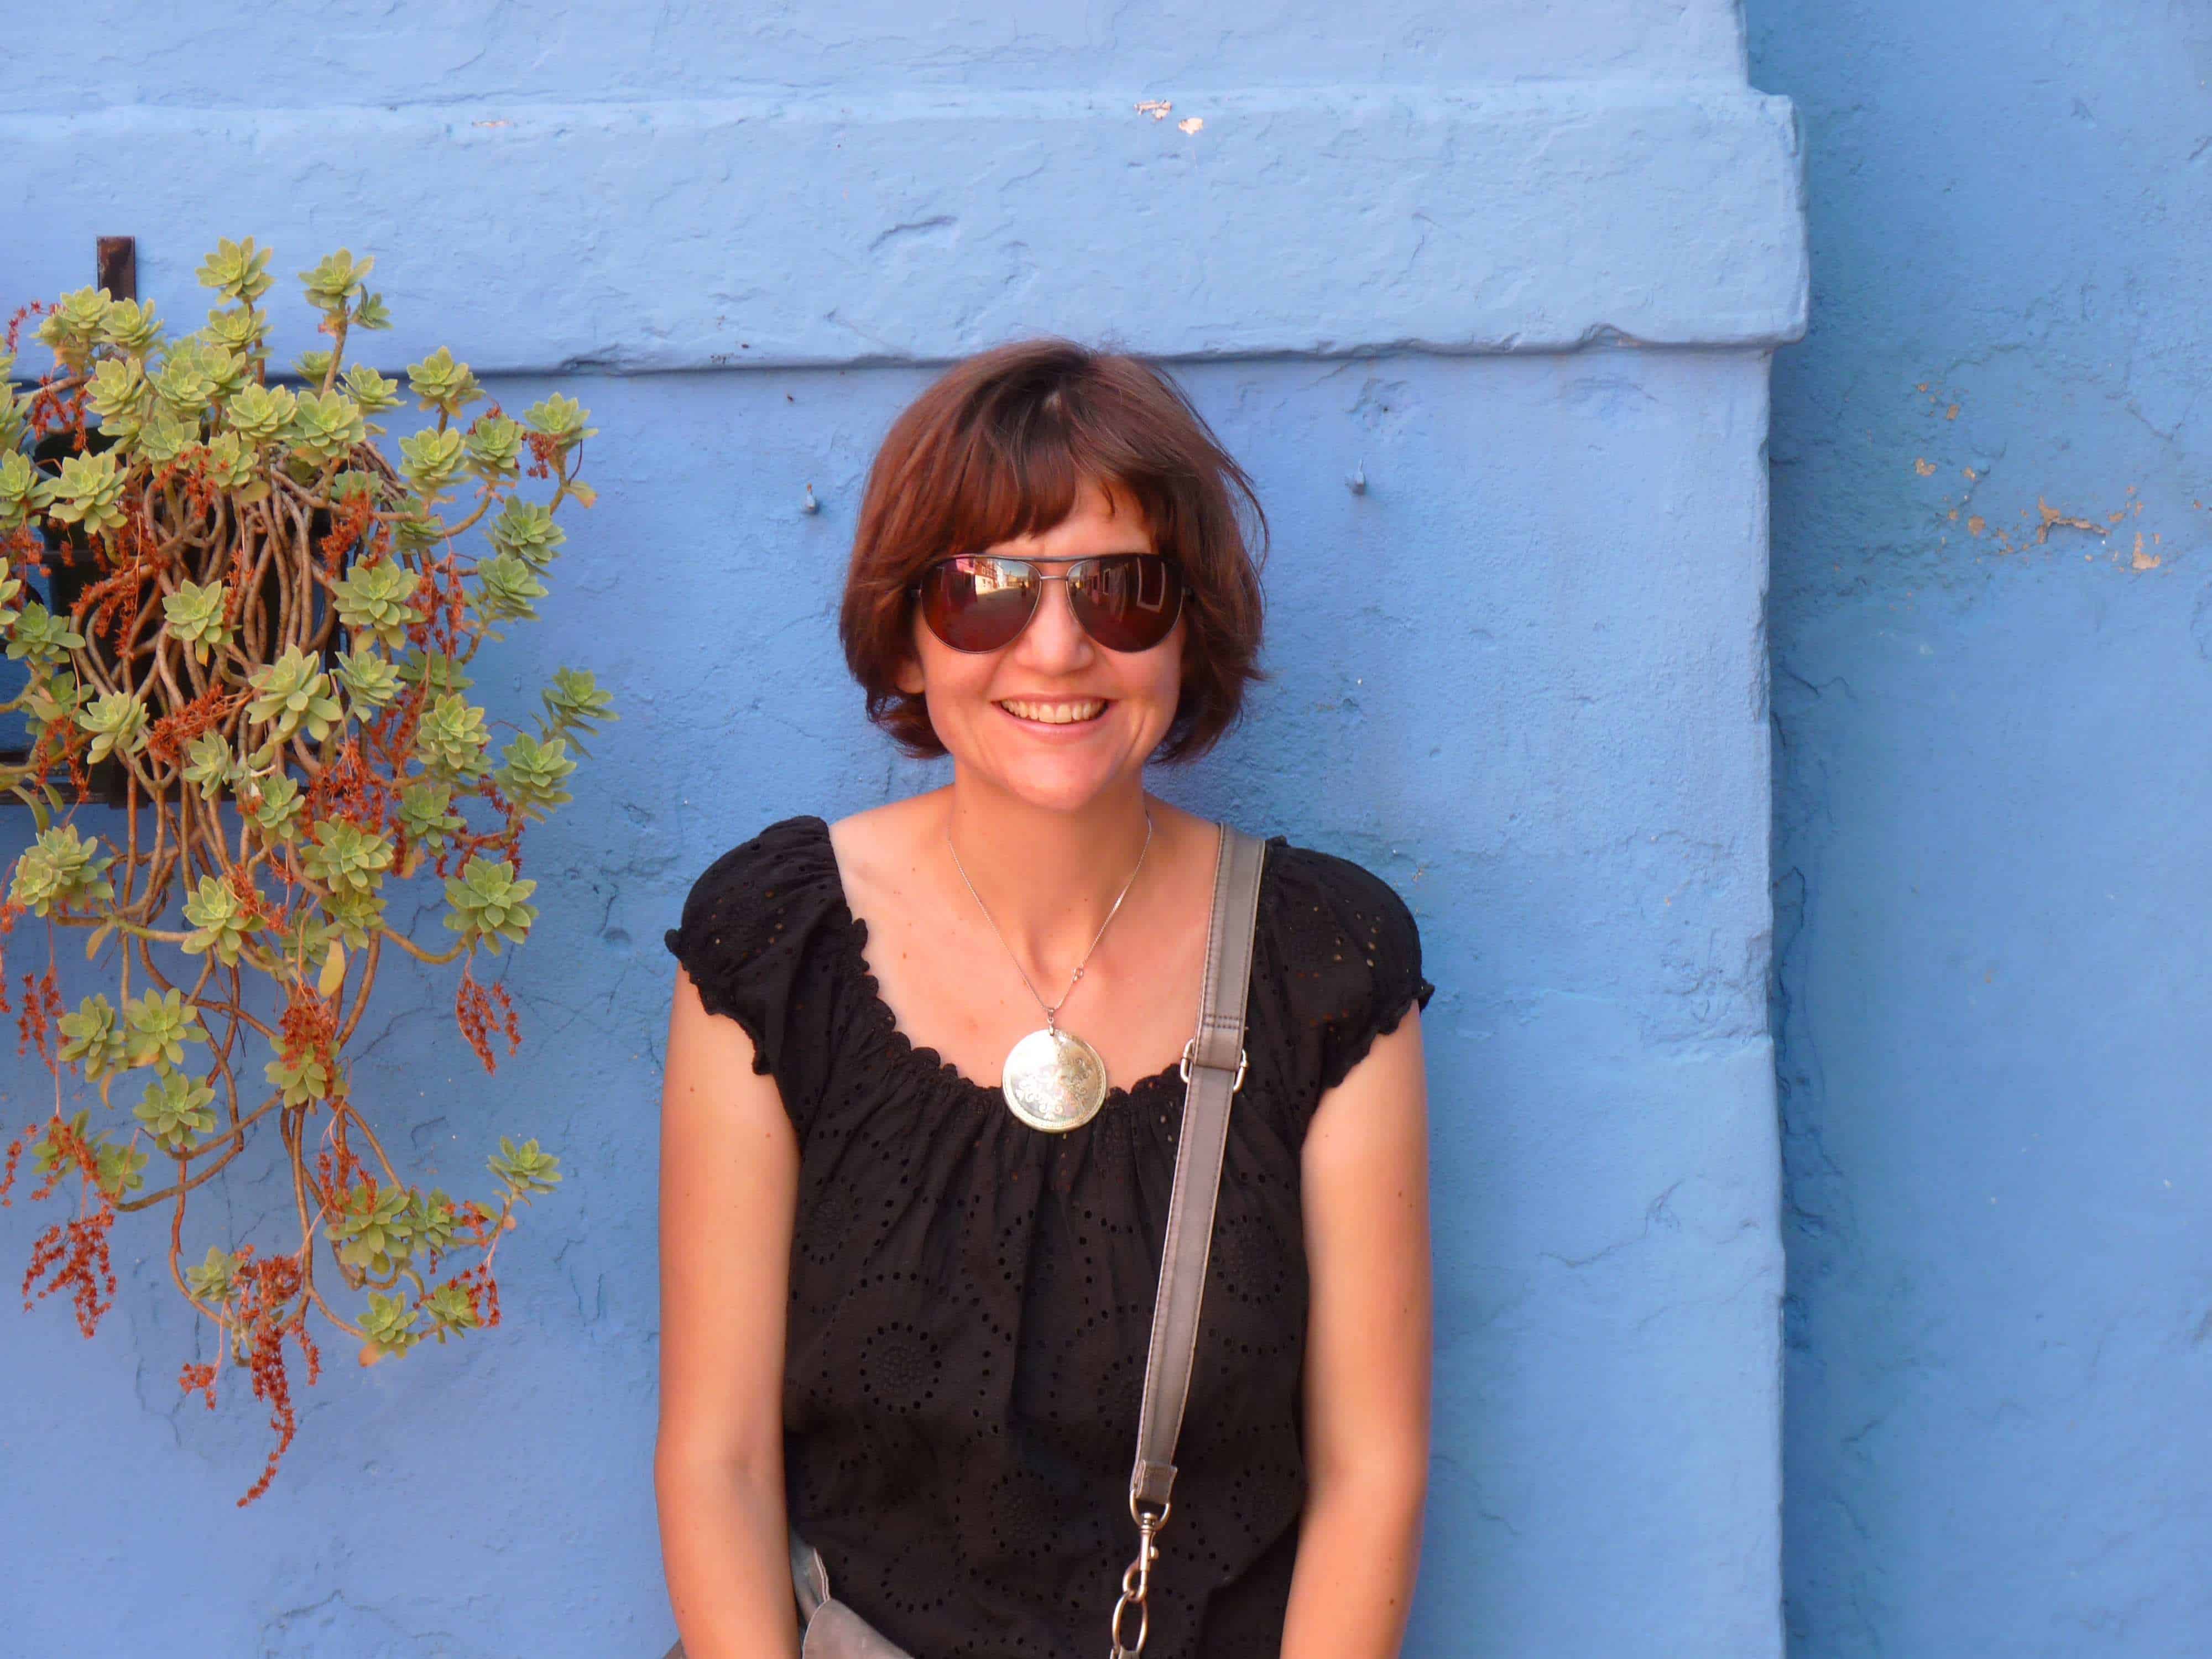 Woman in a black shirt leans against a blue building 